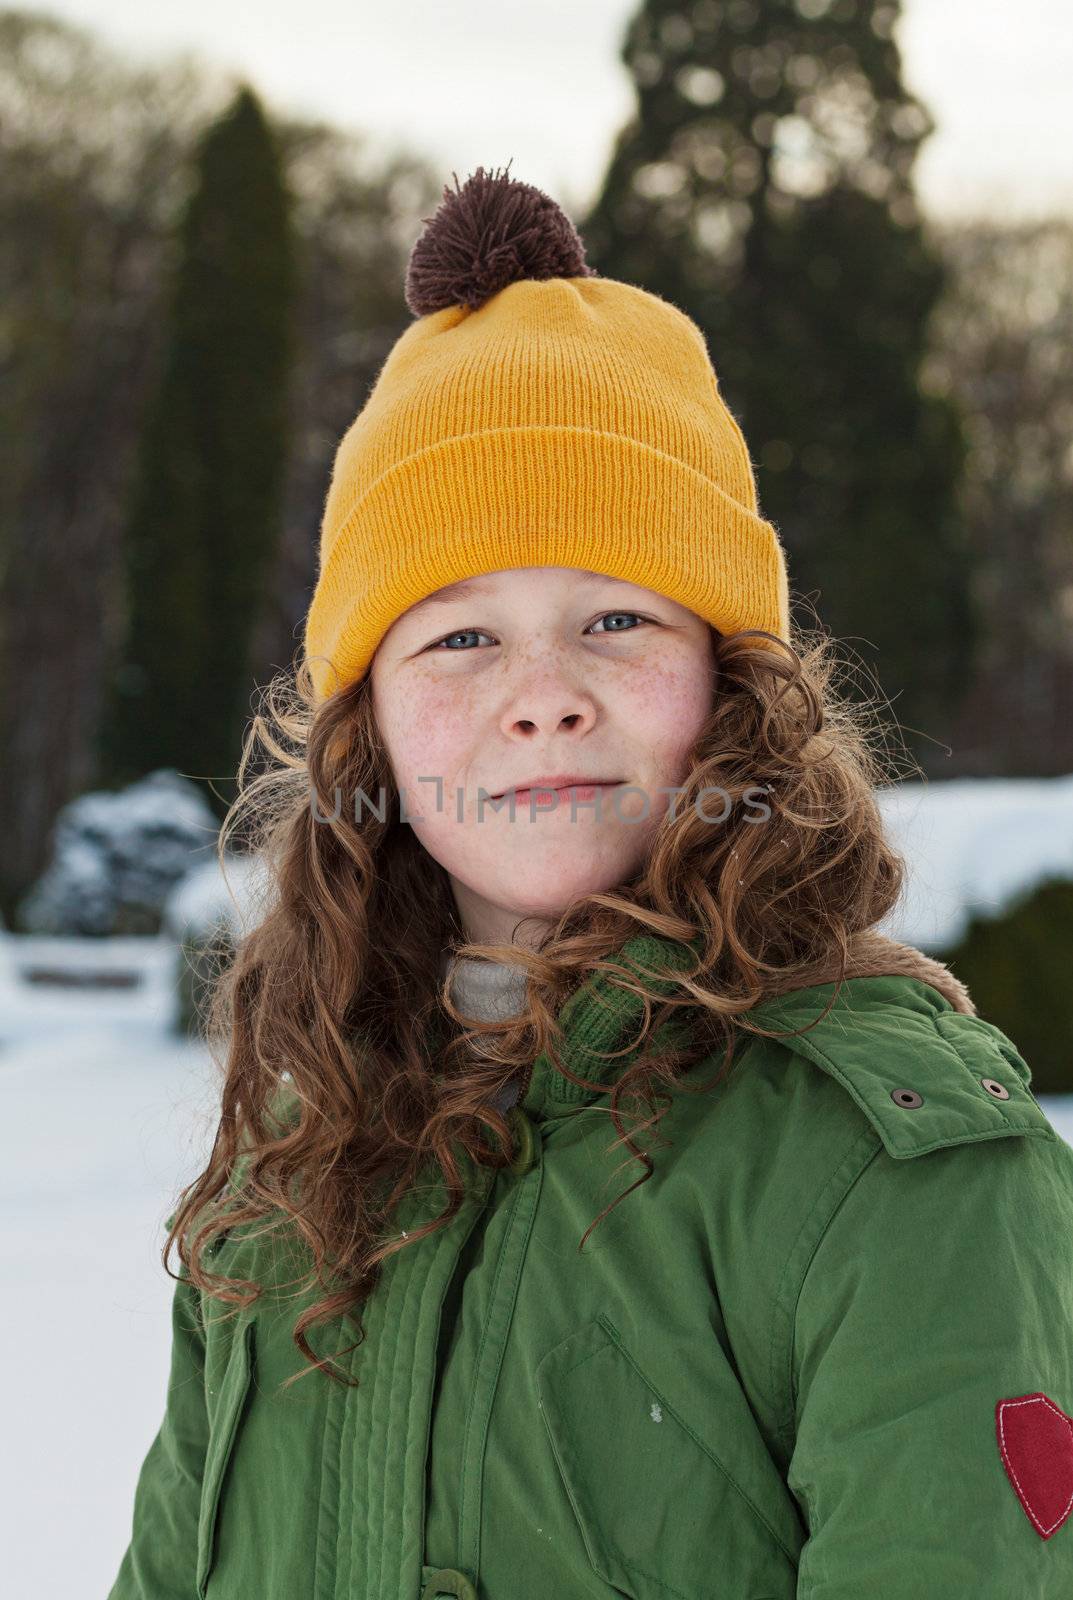 Outdoor winter portrait of a teenager girl